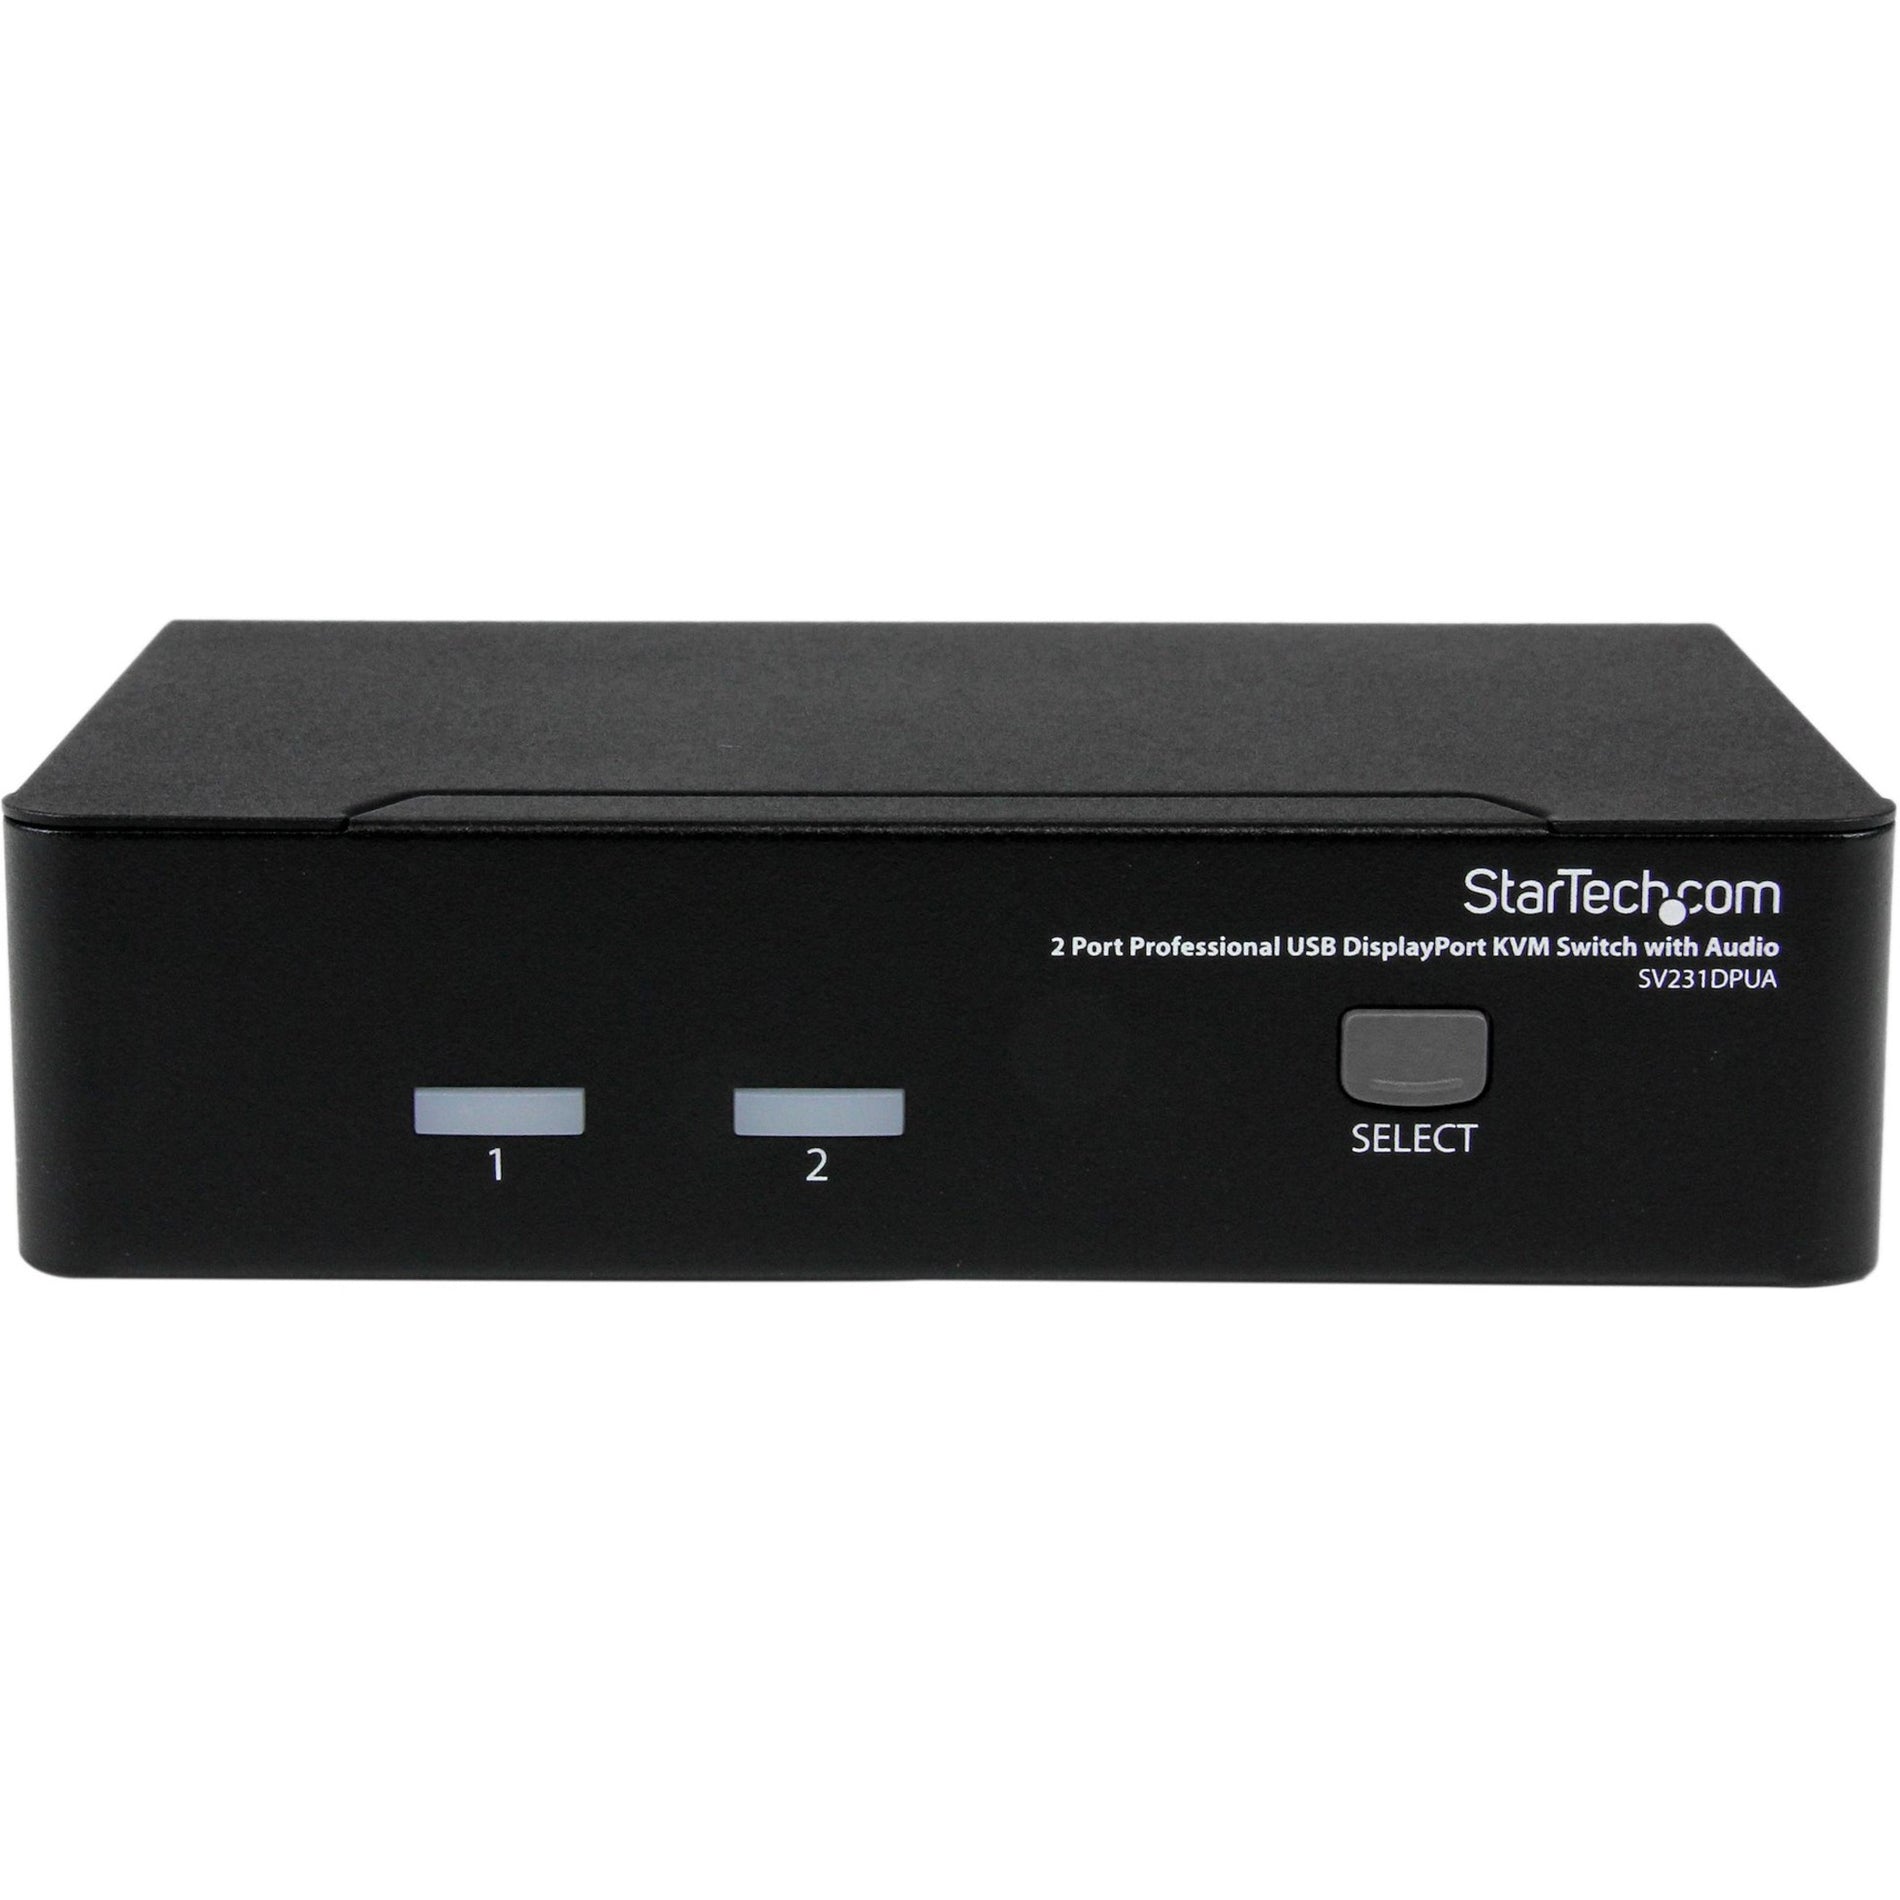 StarTech.com SV231DPUA 2 Port USB DisplayPort KVM Switch with Audio, WQUXGA, 3840 x 2400, 3 Year Warranty